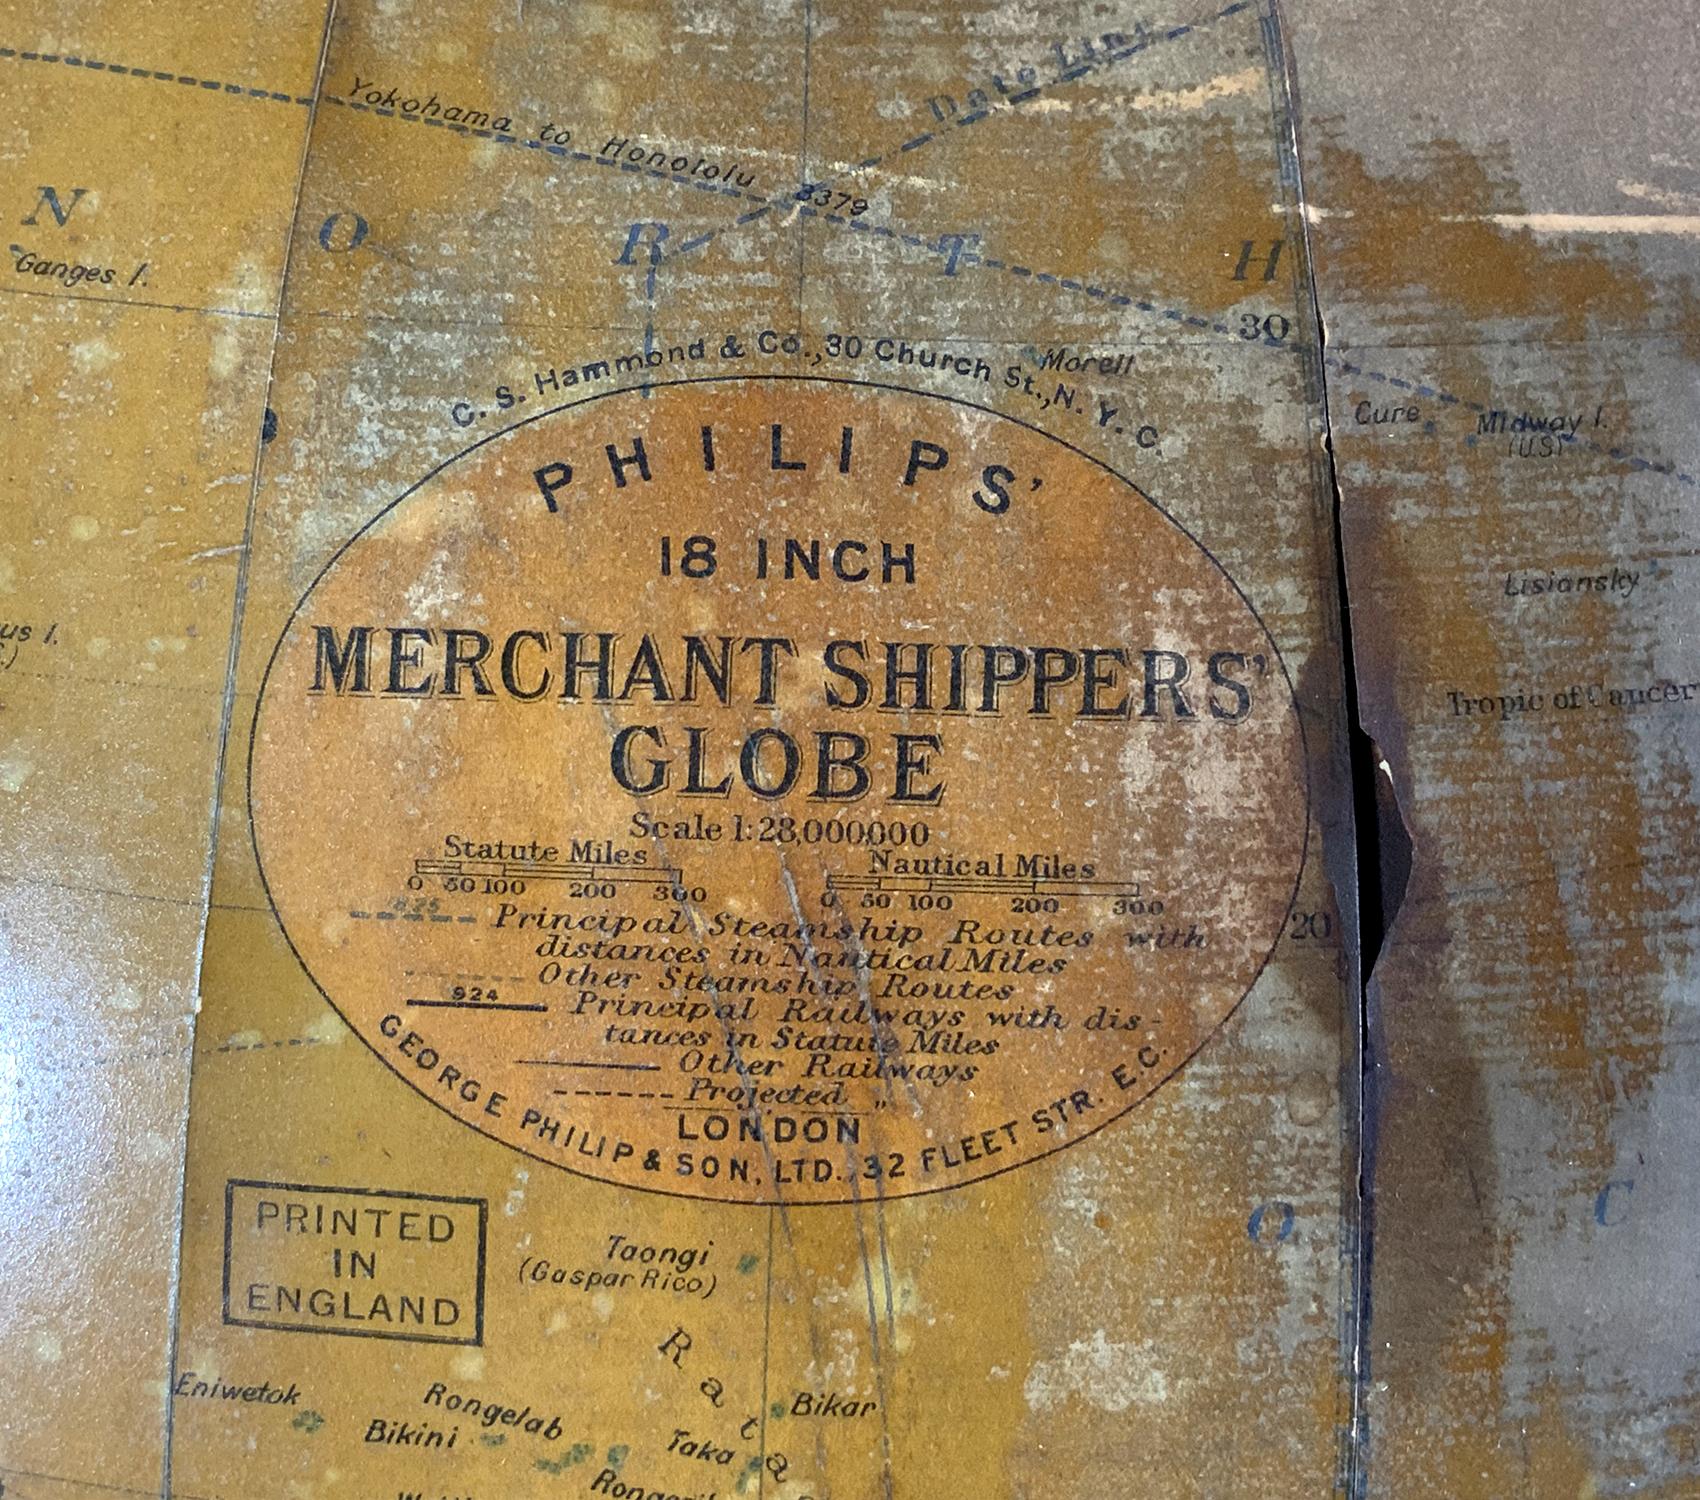 Philips Merchant Shipper's Globe, London 2